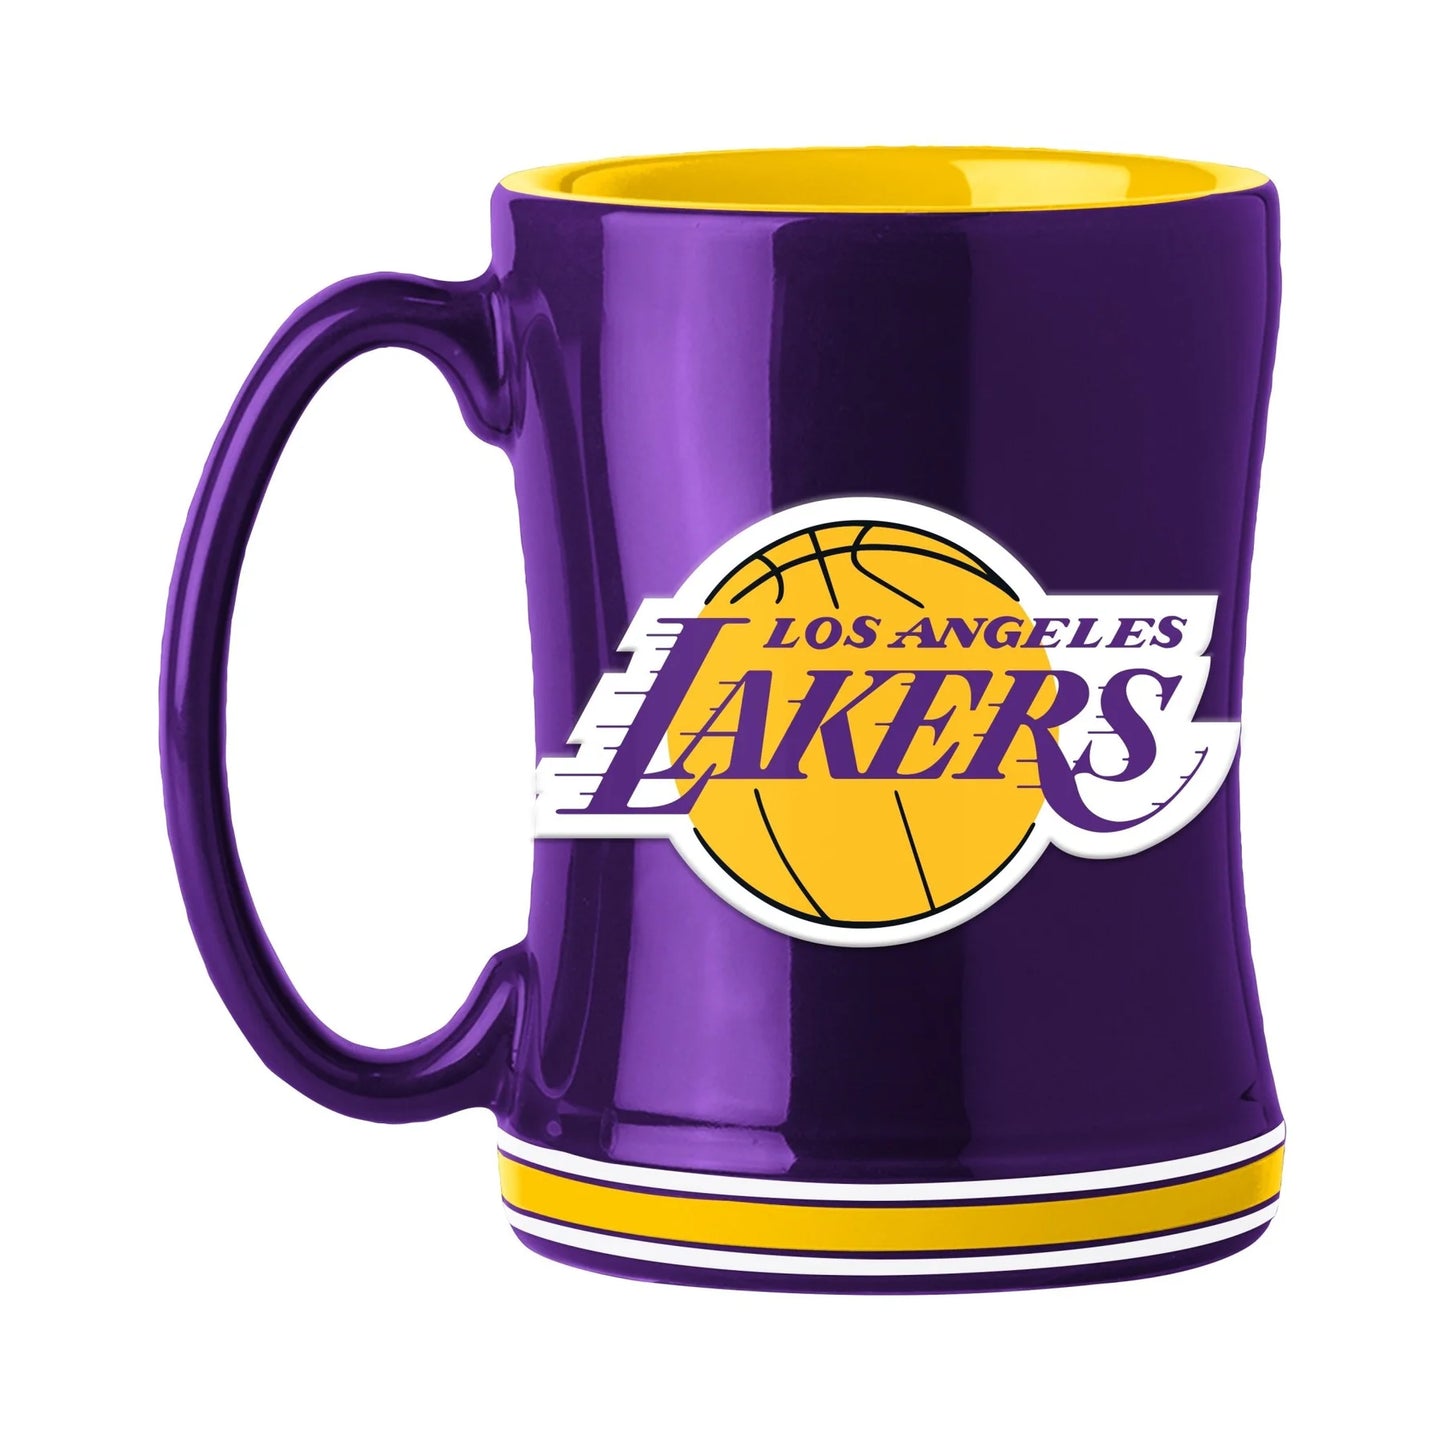 Los Angeles Lakers relief coffee mug